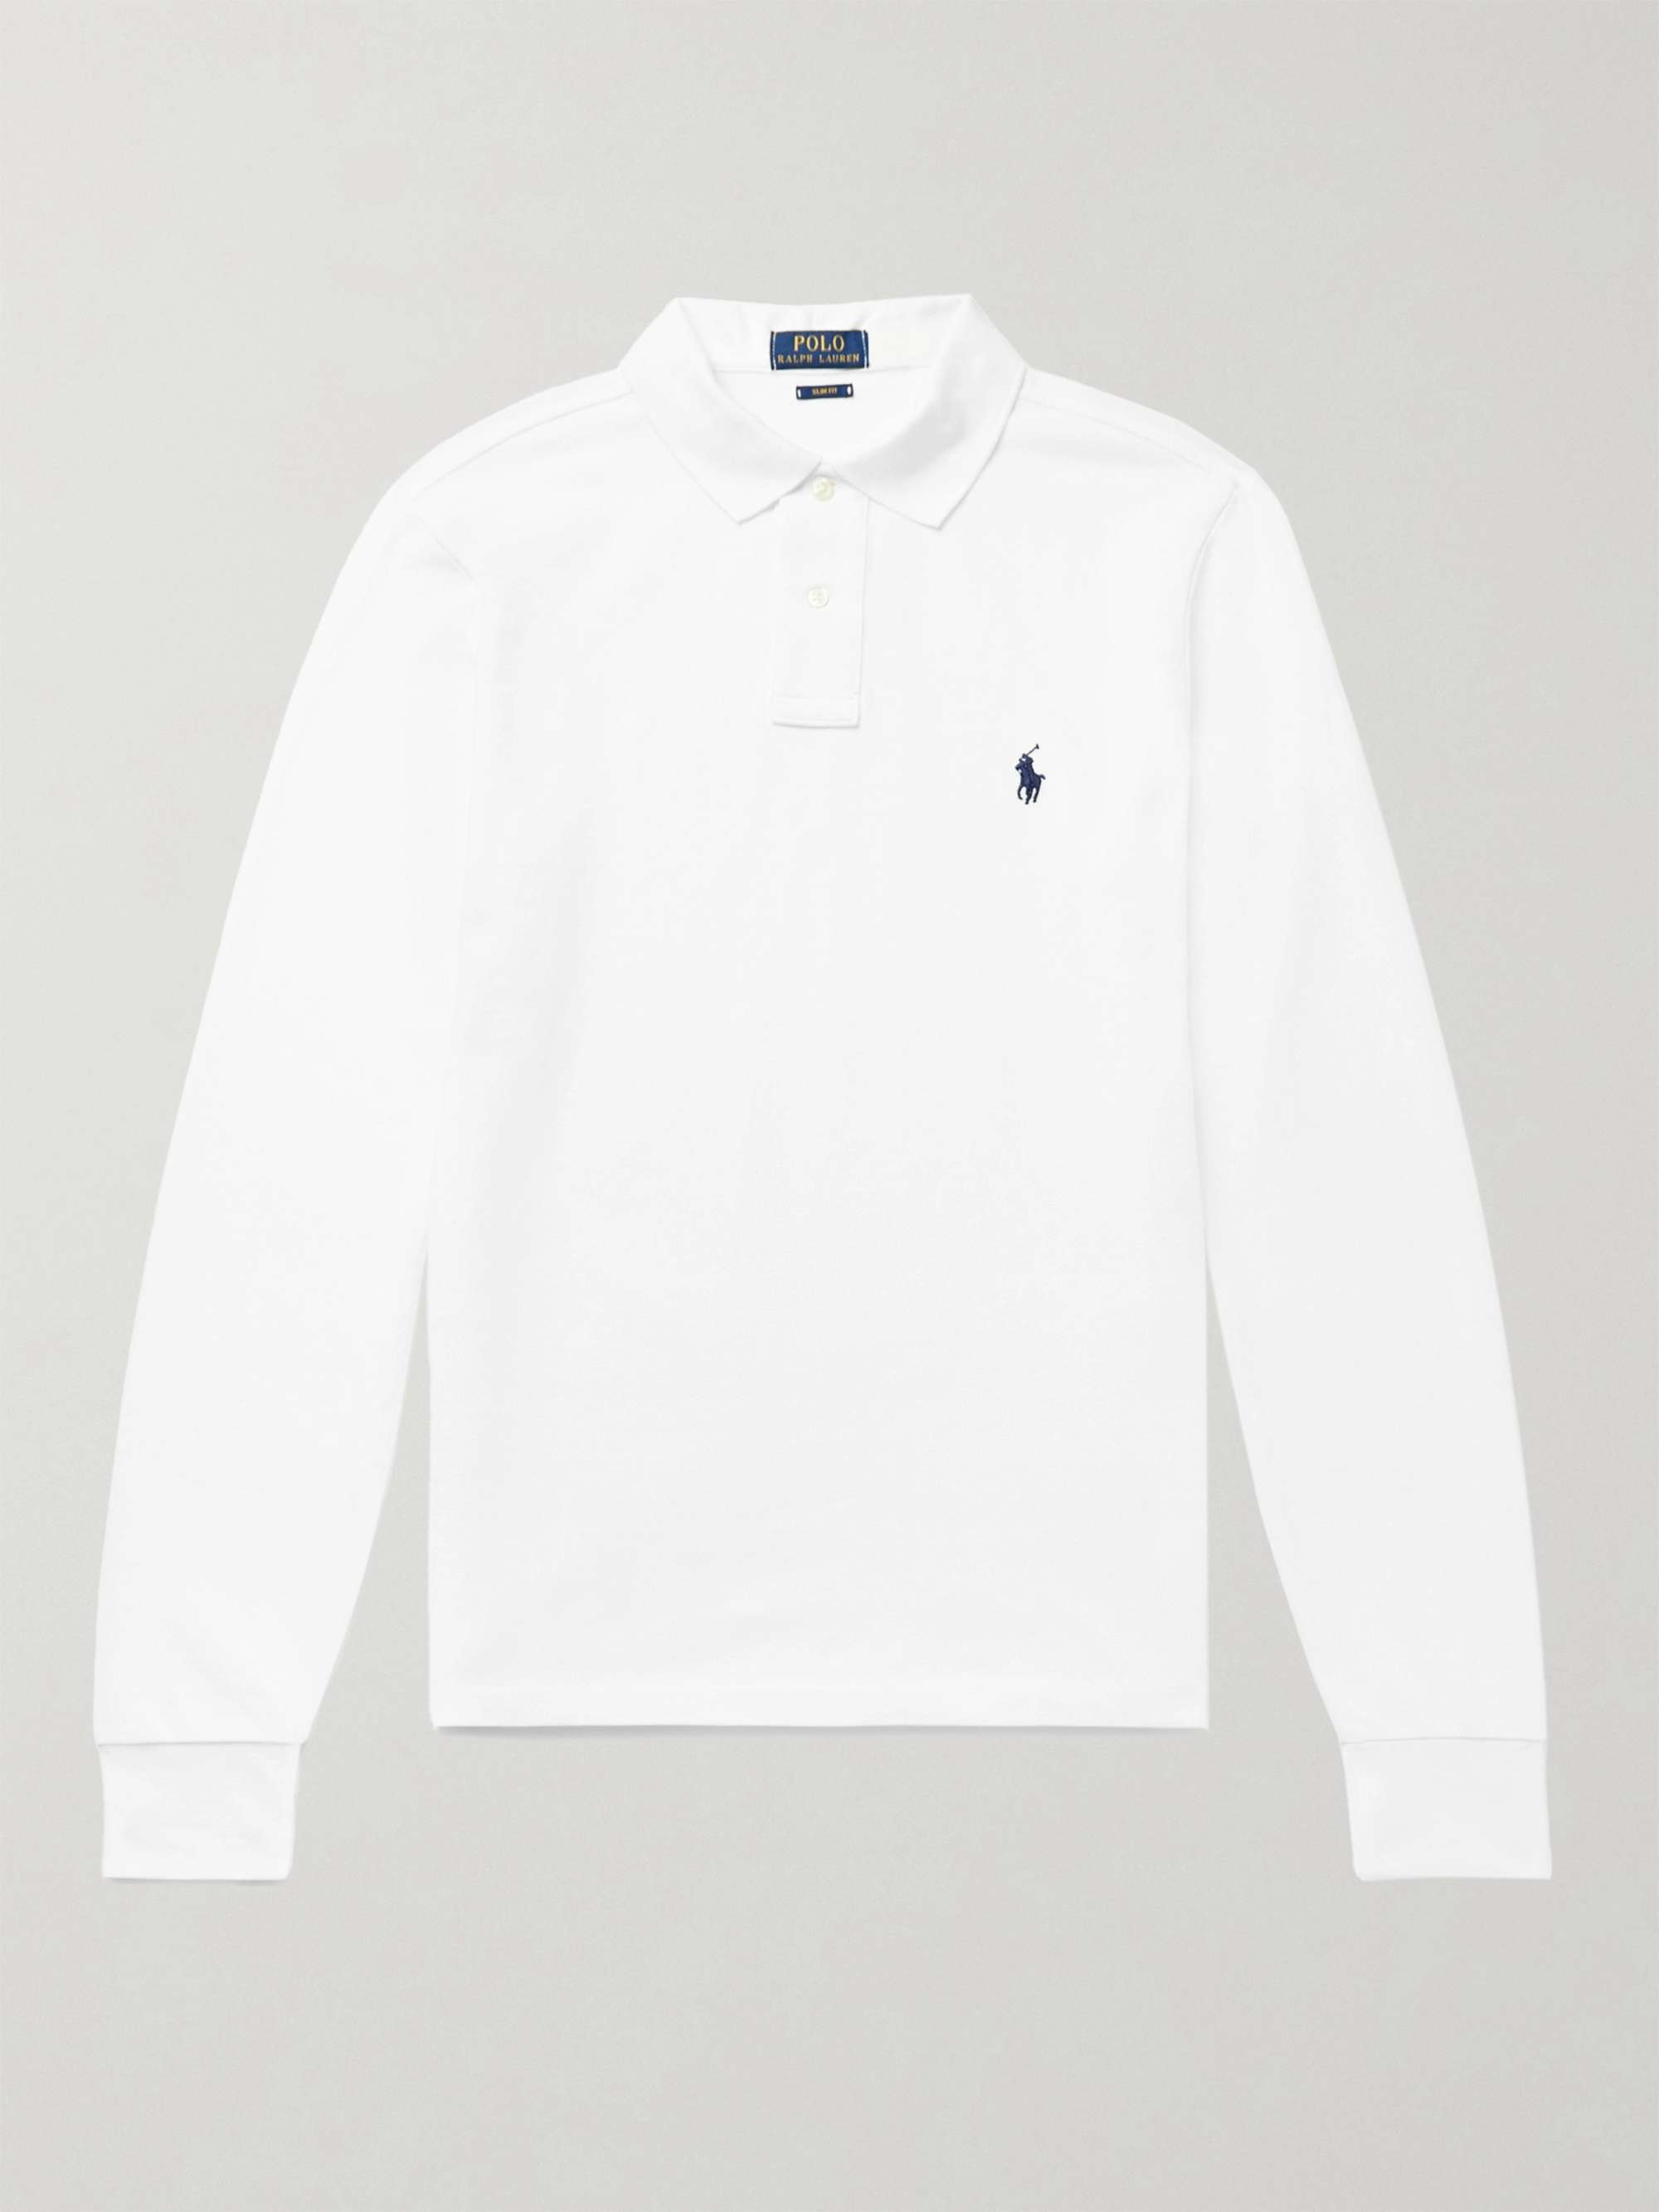 White Slim-Fit Cotton-Piqué Polo Shirt | POLO RALPH LAUREN | MR PORTER